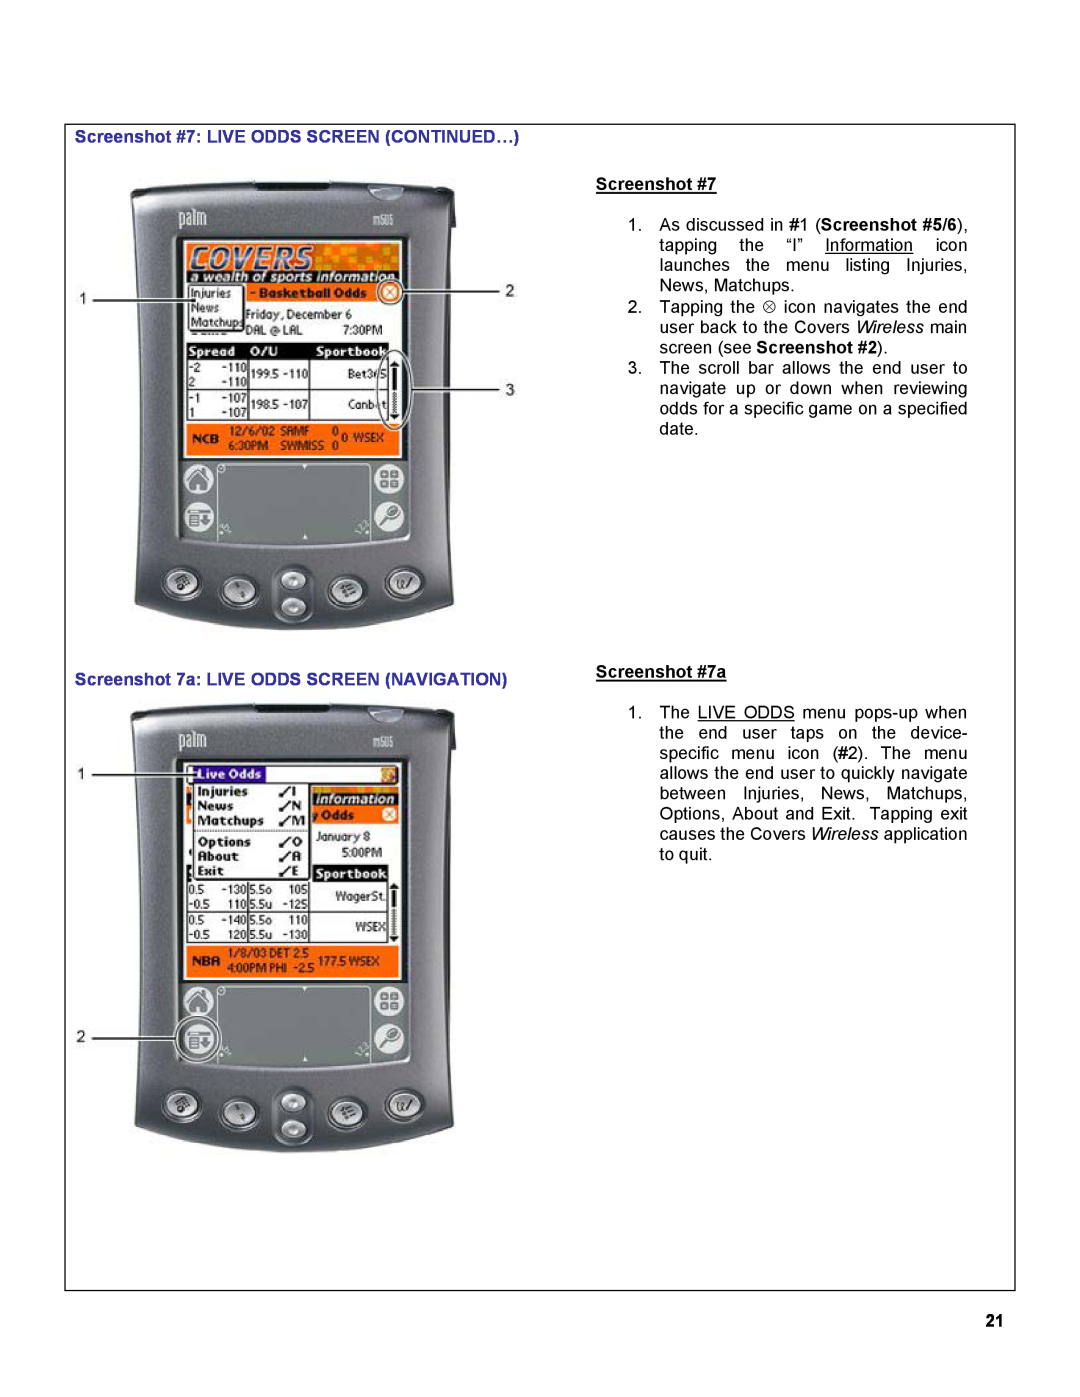 Palm OS Devices manual Screenshot #7 LIVE ODDS SCREEN CONTINUED…, Screenshot 7a LIVE ODDS SCREEN NAVIGATION, Screenshot #7a 